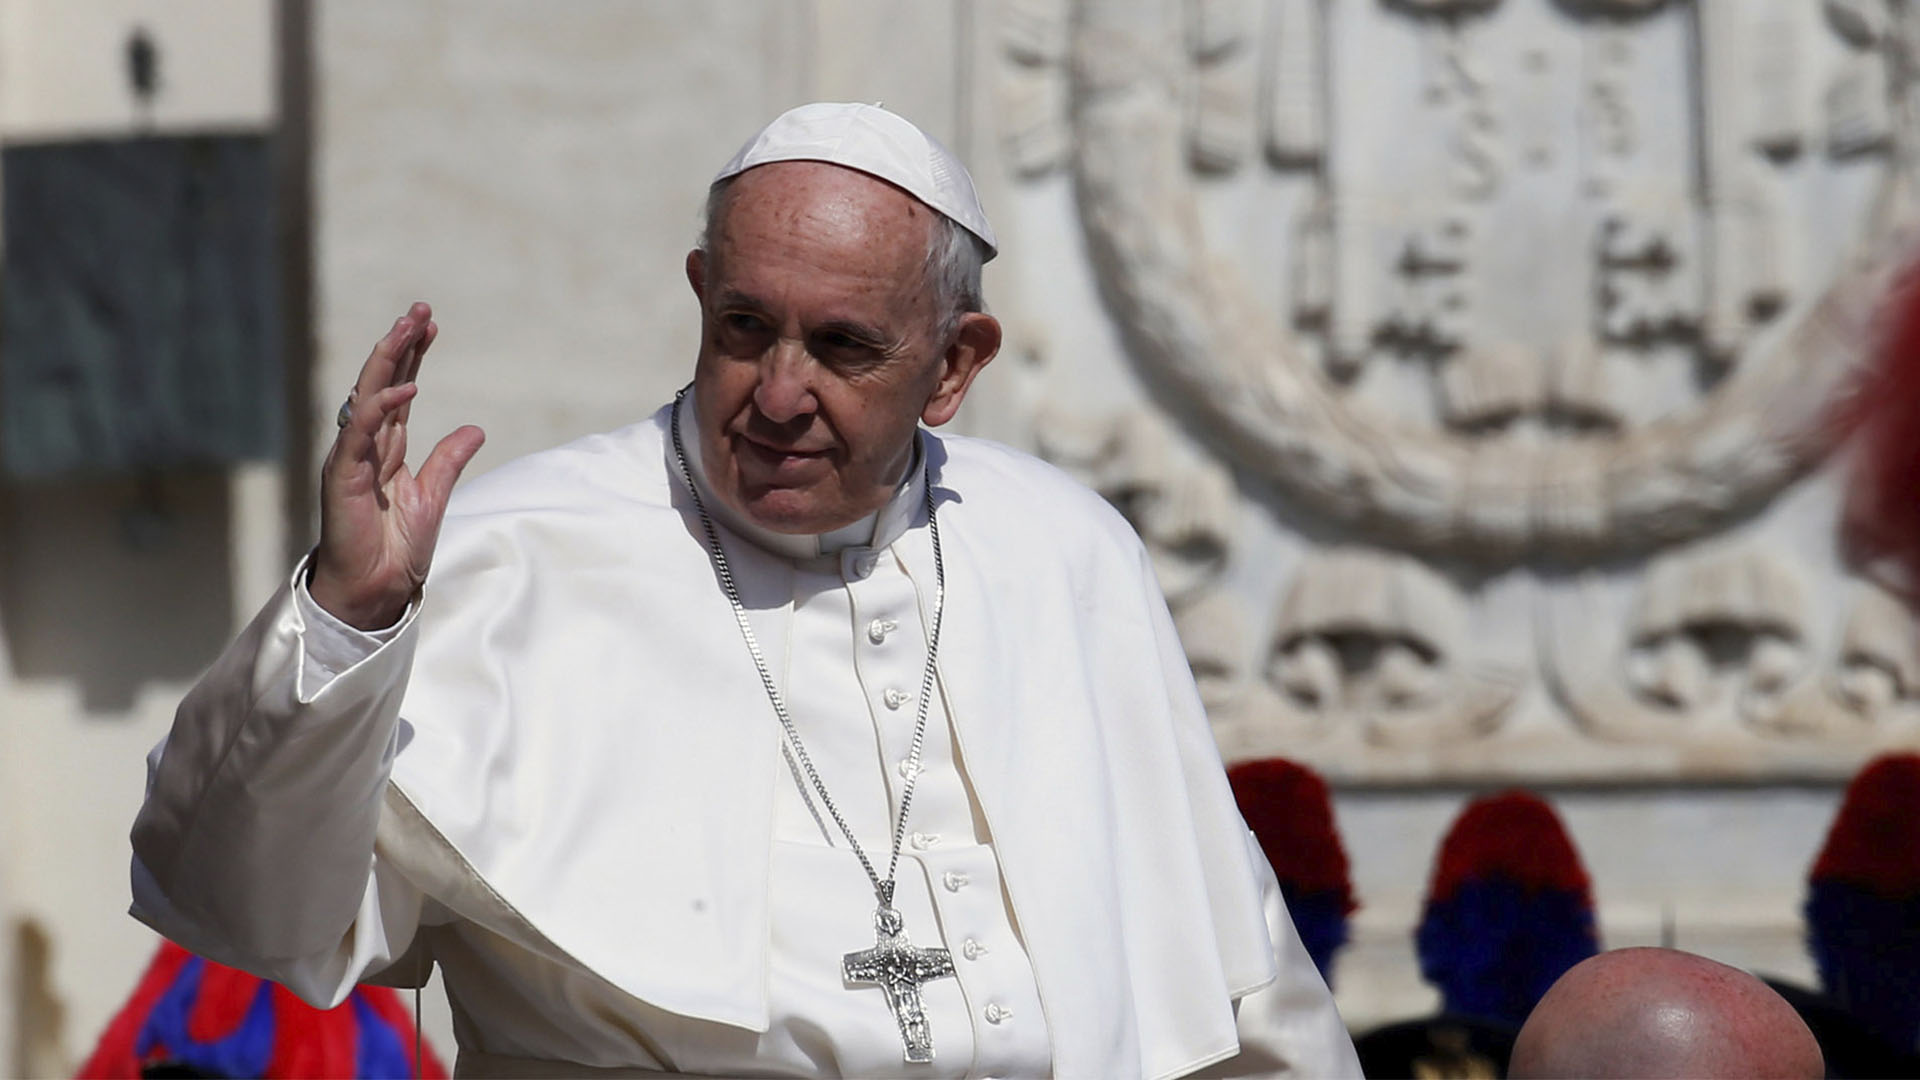 Vaticano: se cancela tradicional visita del papa Francisco a Belén por pandemia